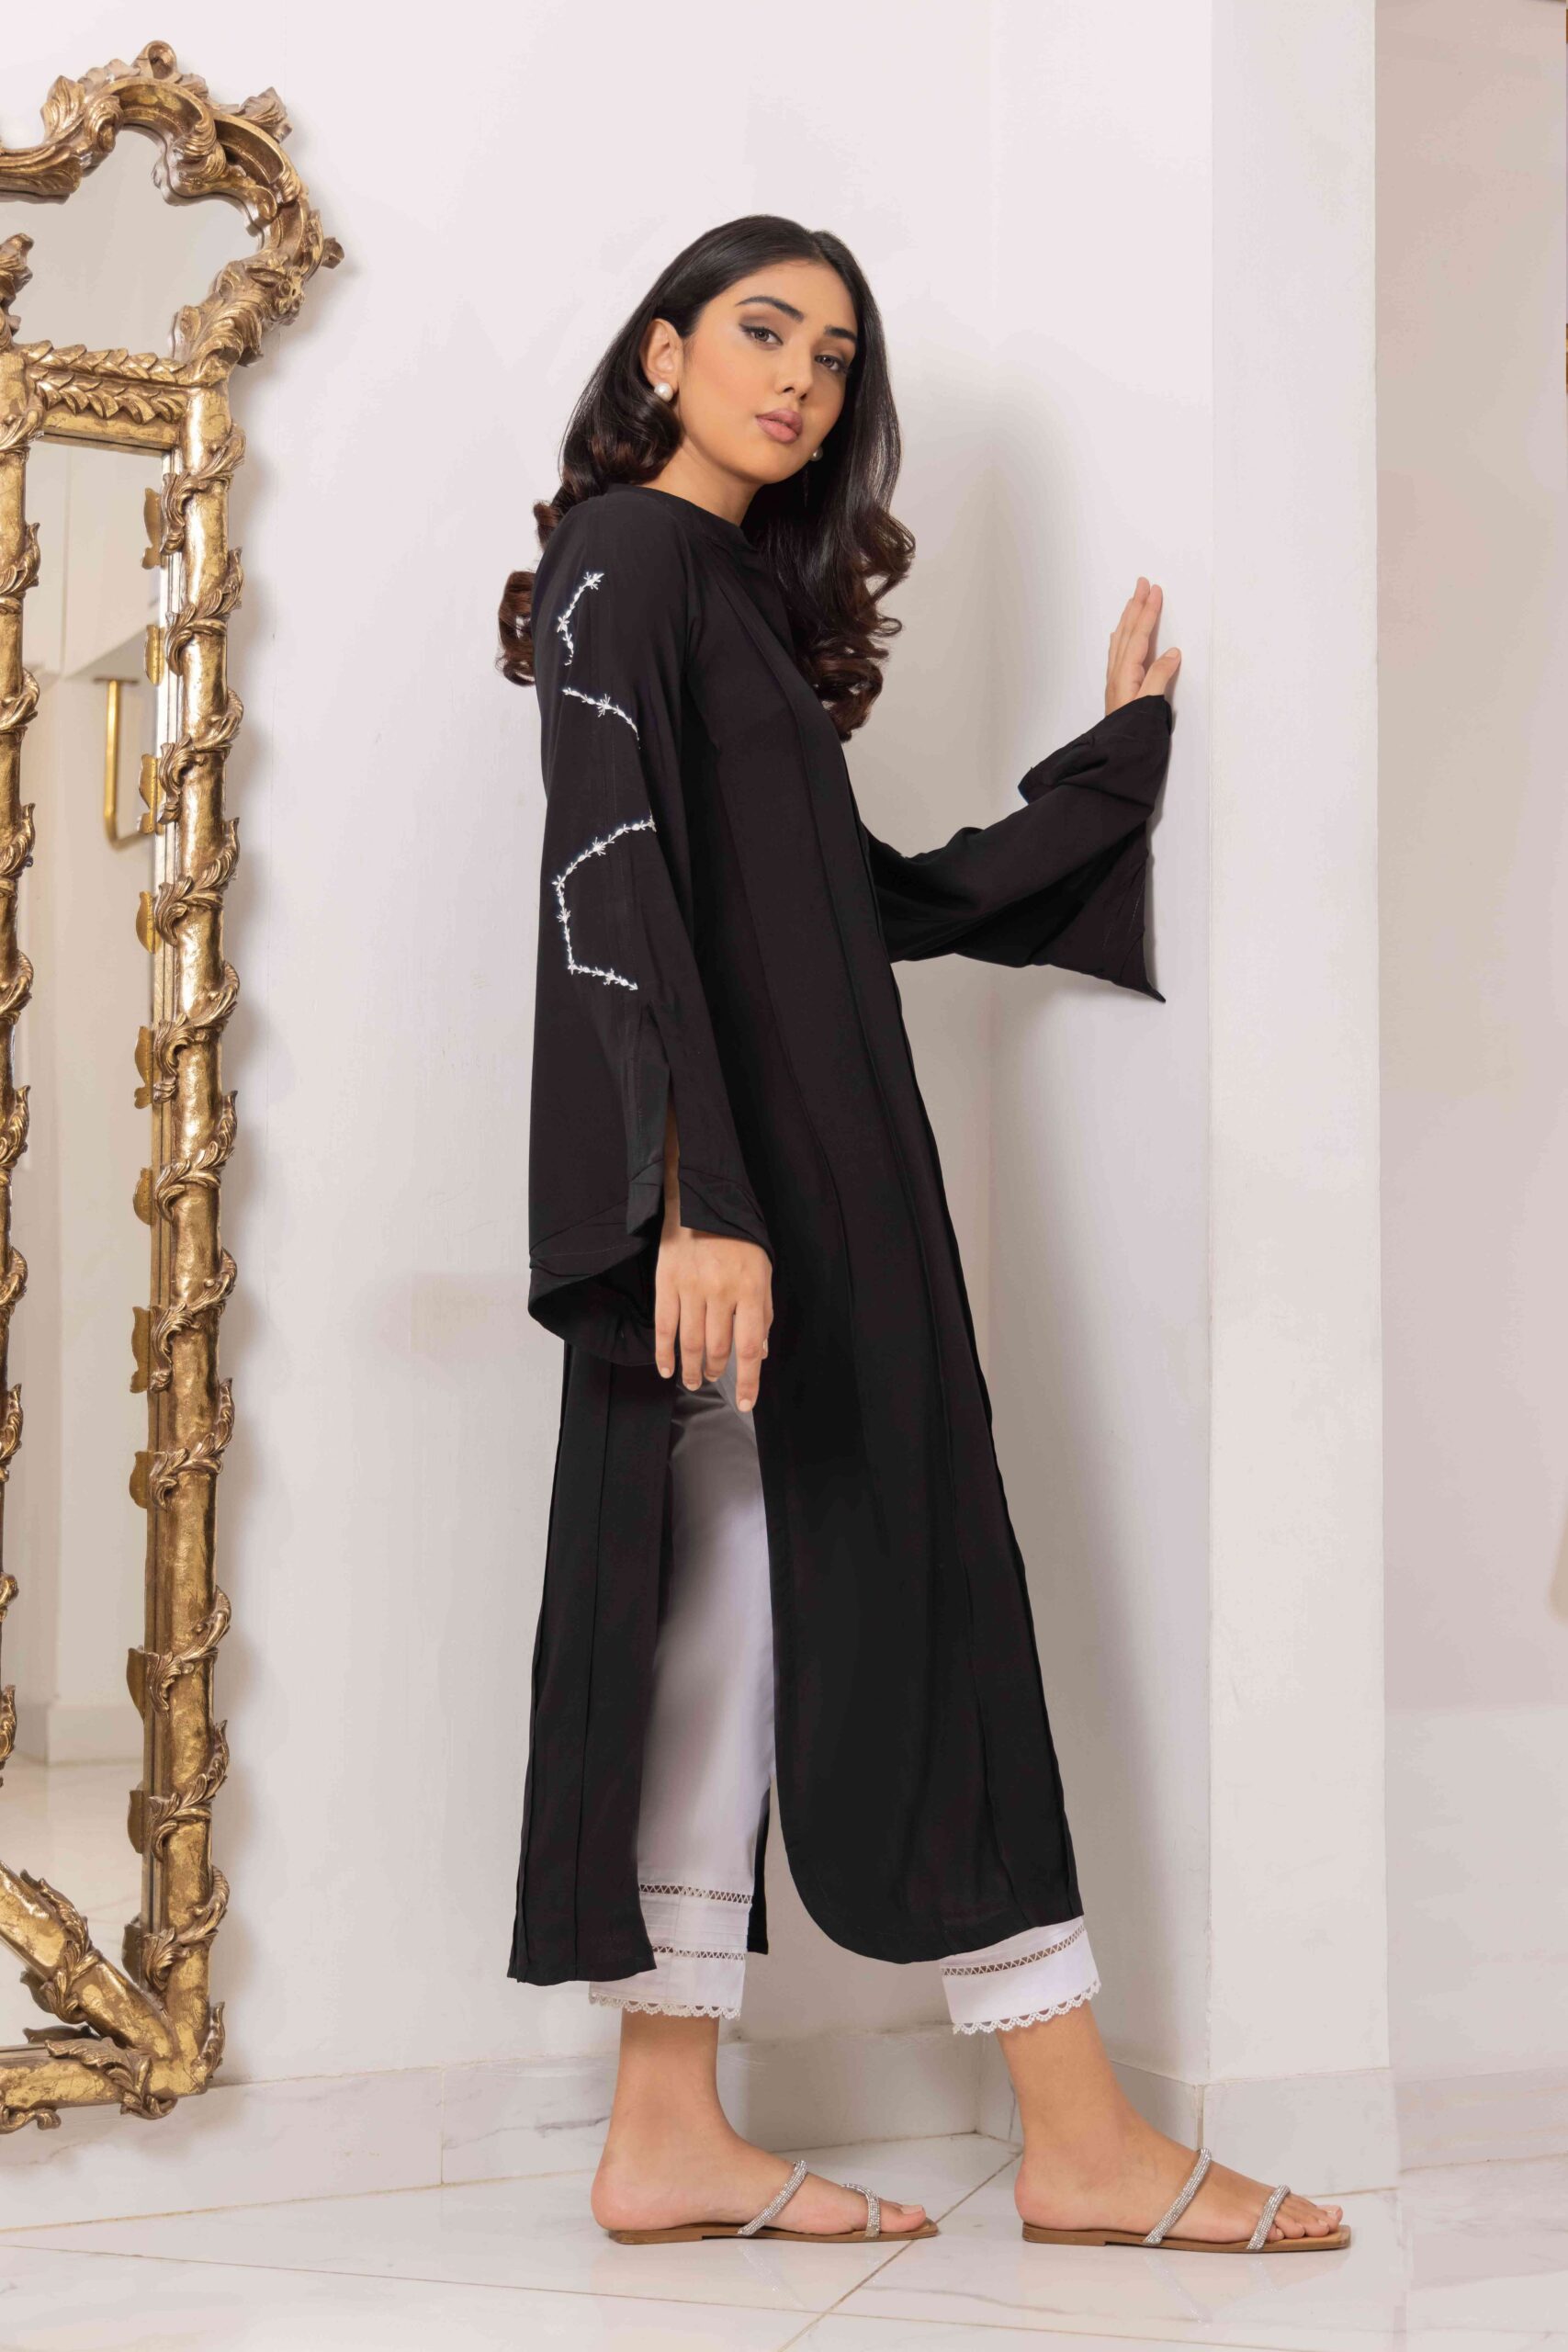 SHK-1157 - Pakistani Designer Clothes Buy Online